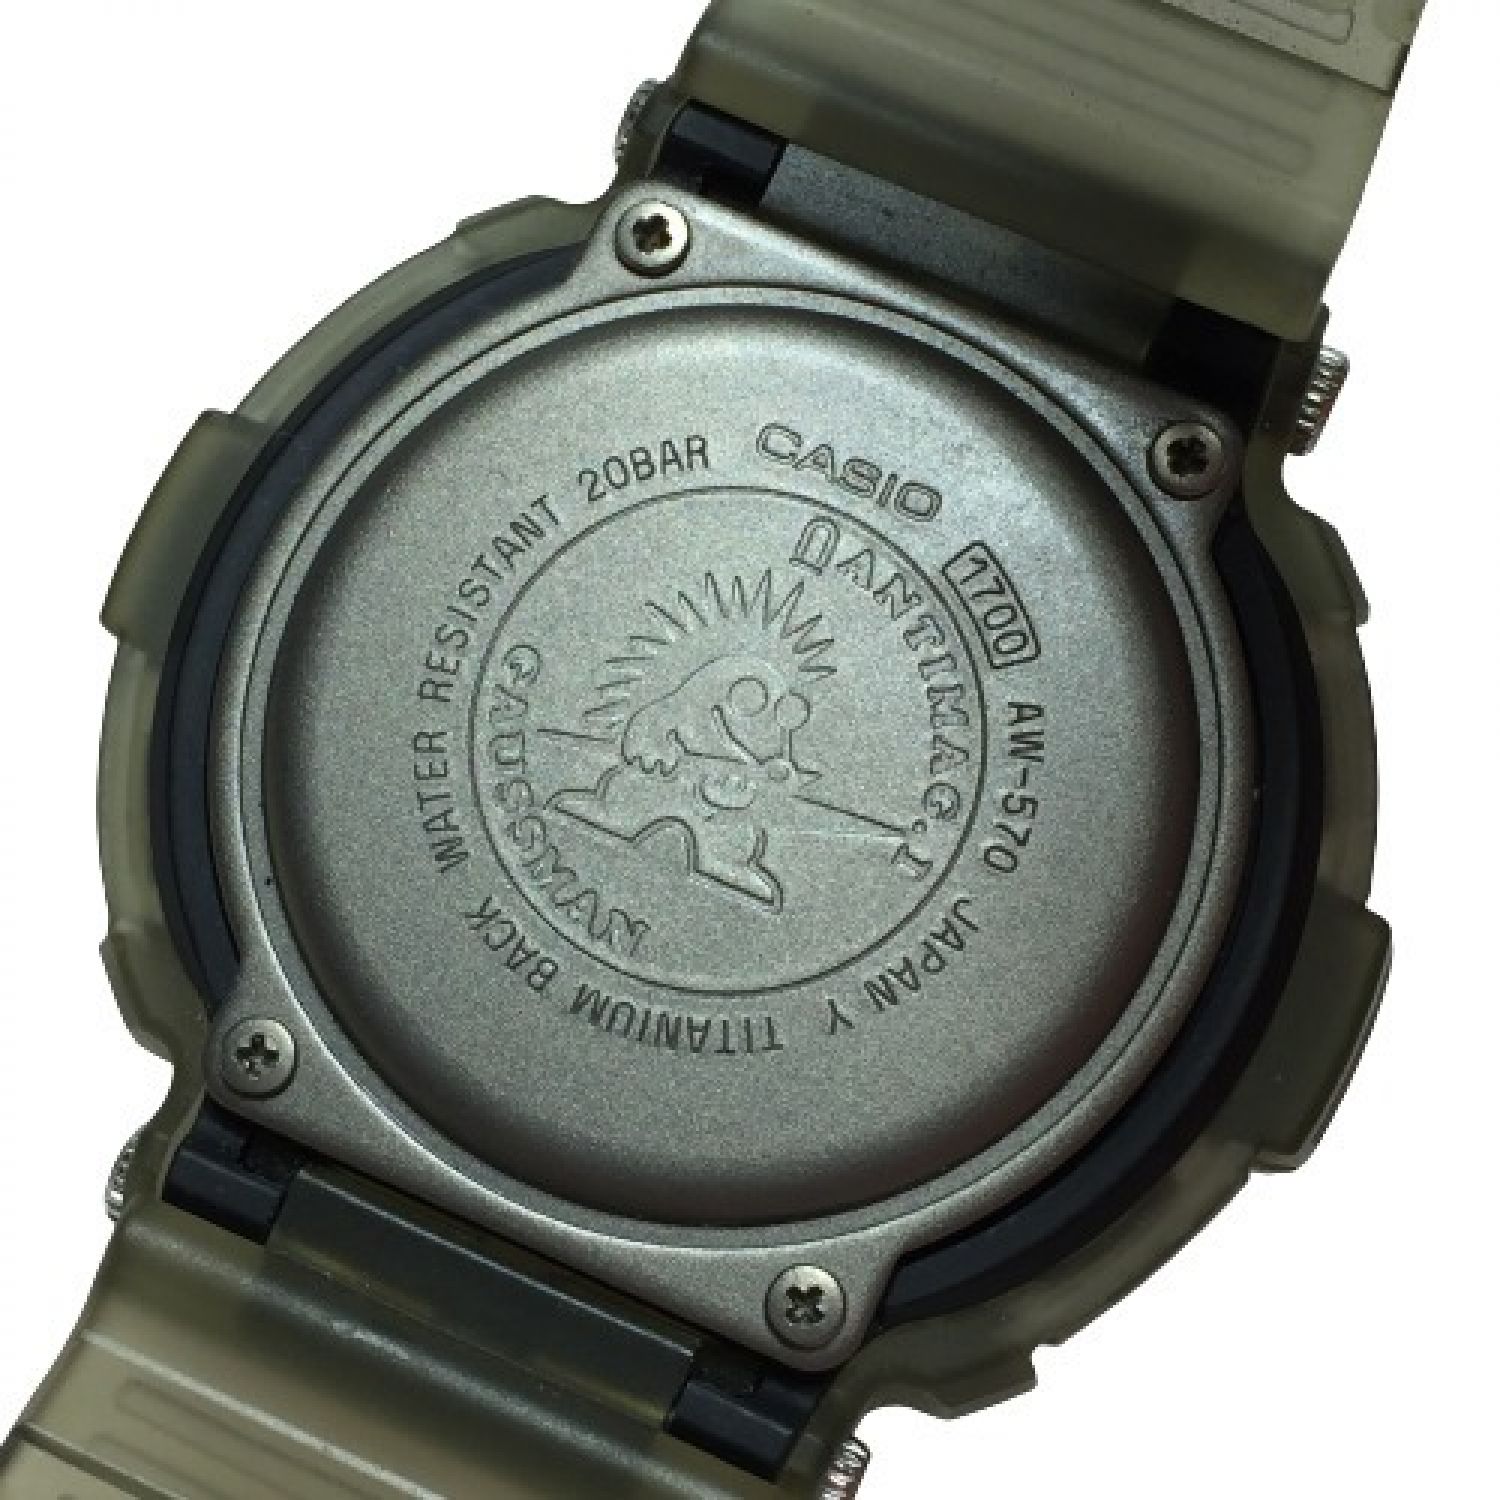 CASIO G-SHOCK RESIST 1700 AW-570 - 腕時計(アナログ)